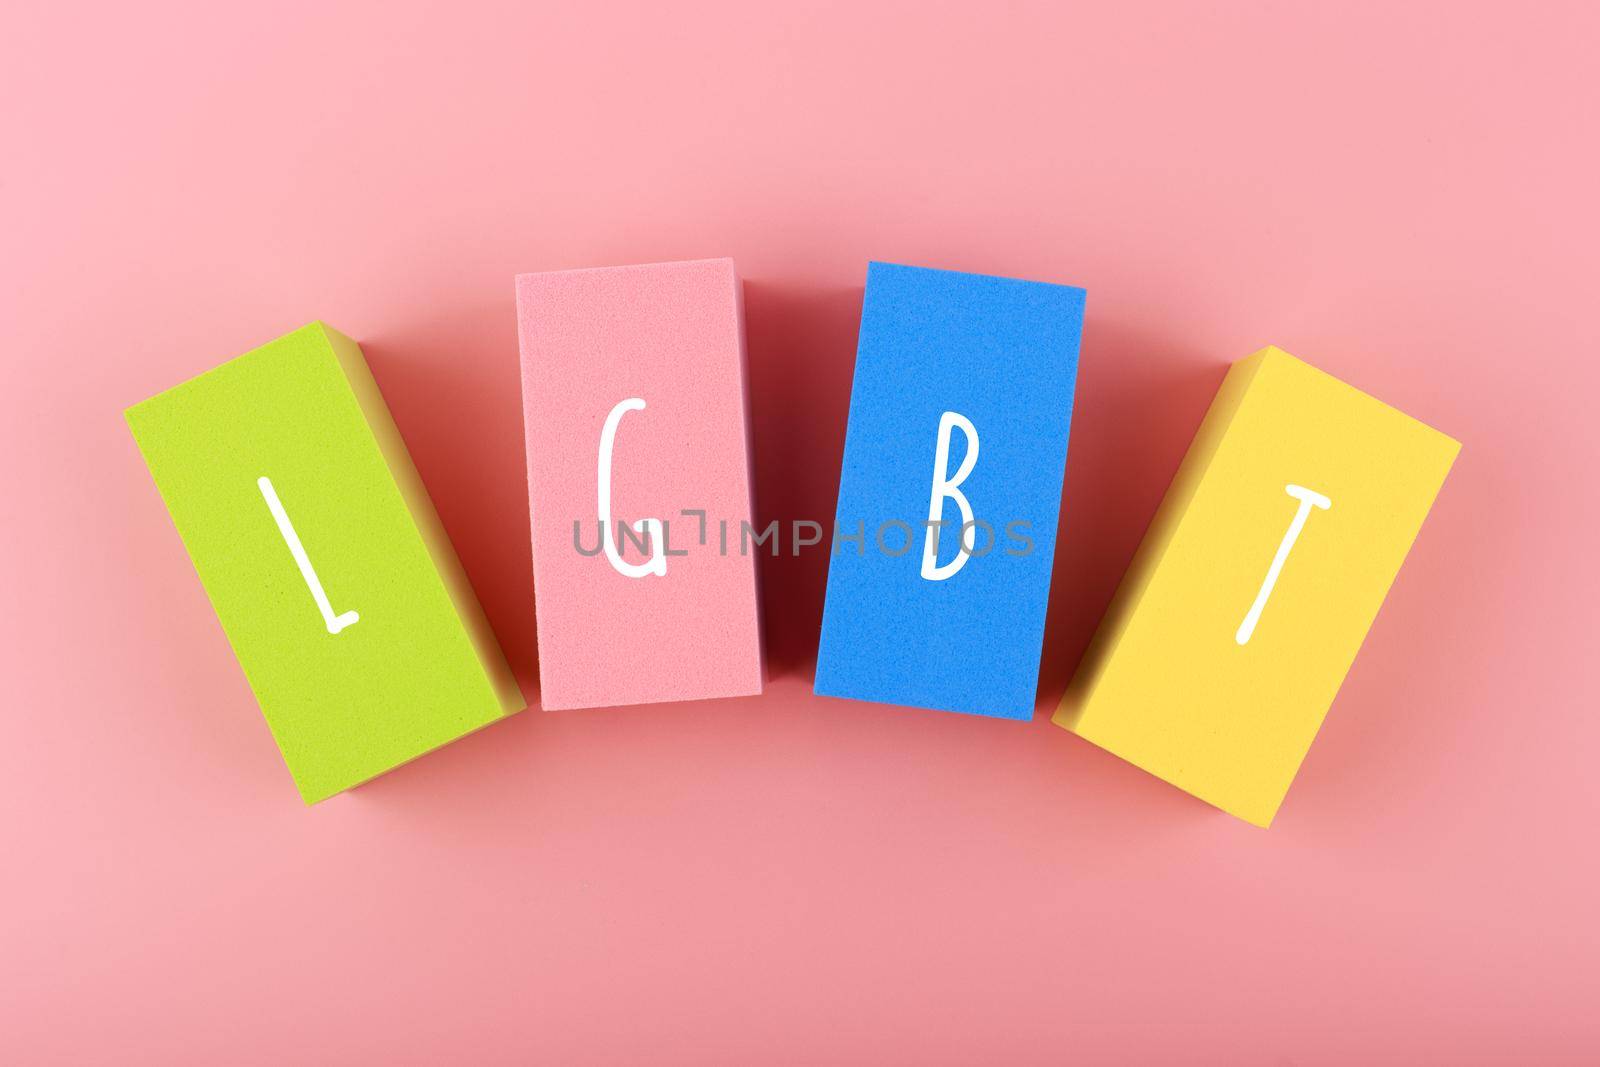 Lgbt letters on multicolored rectangular geometric figures on pink background. by Senorina_Irina